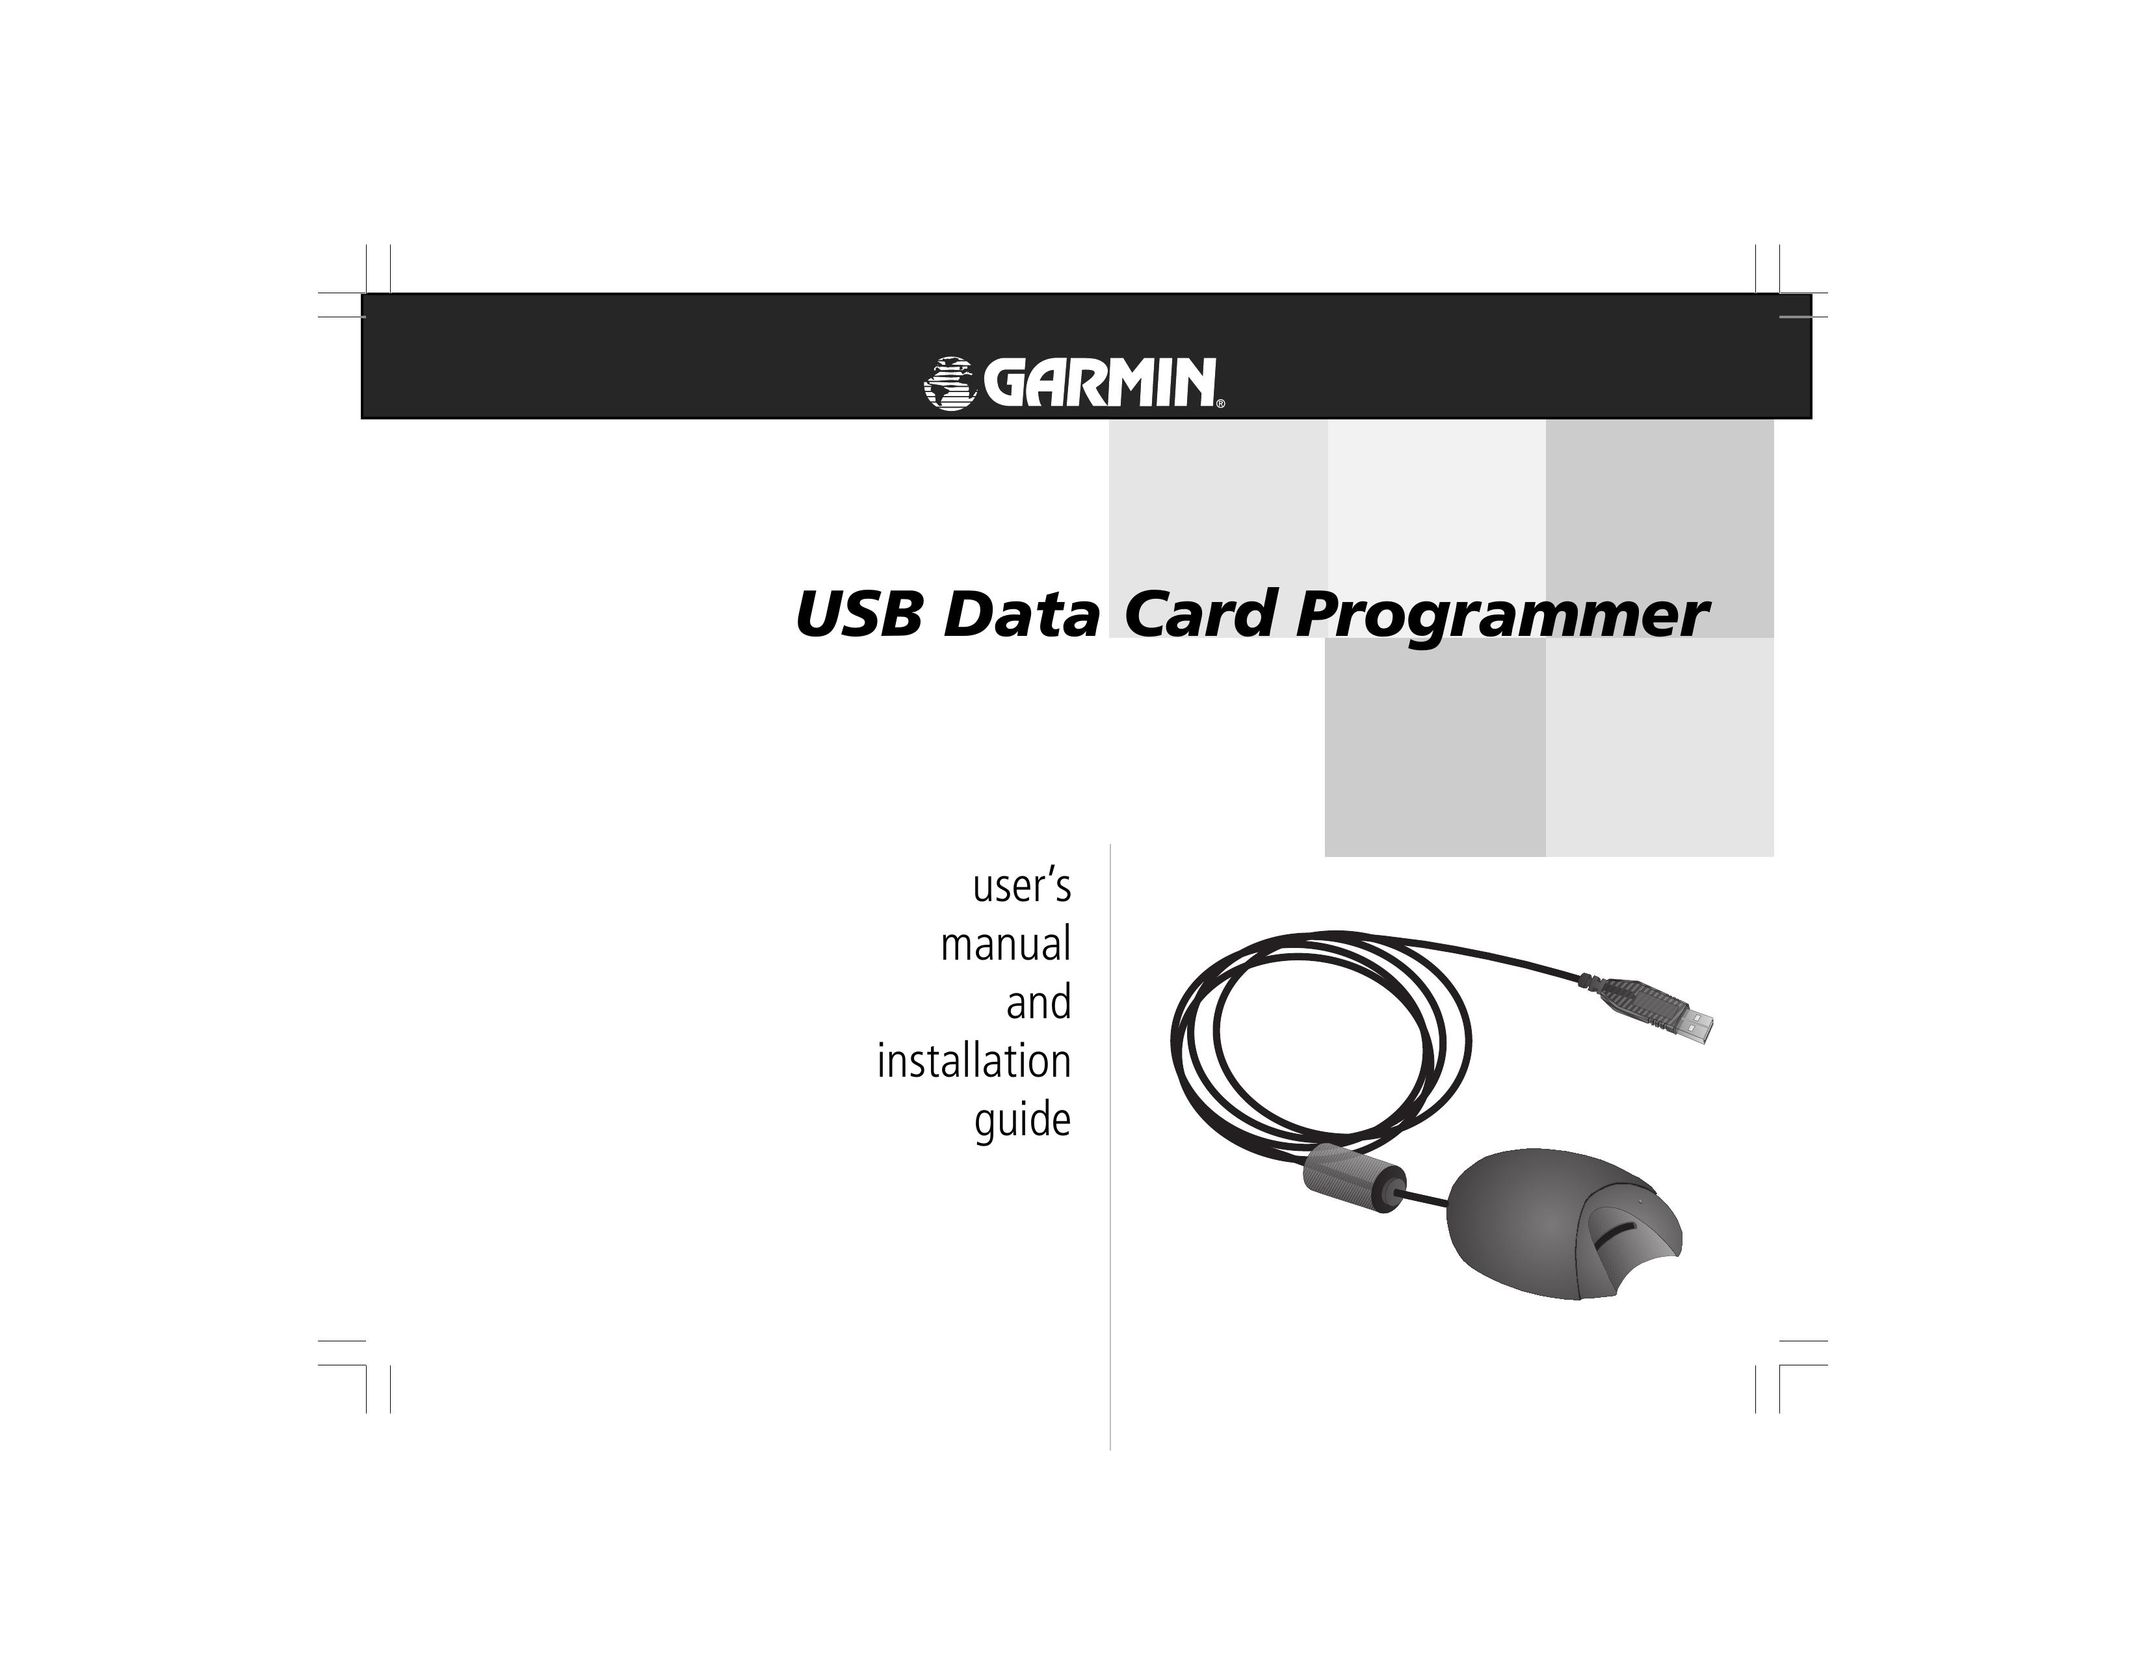 Garmin USB Data Card Programmer Network Card User Manual